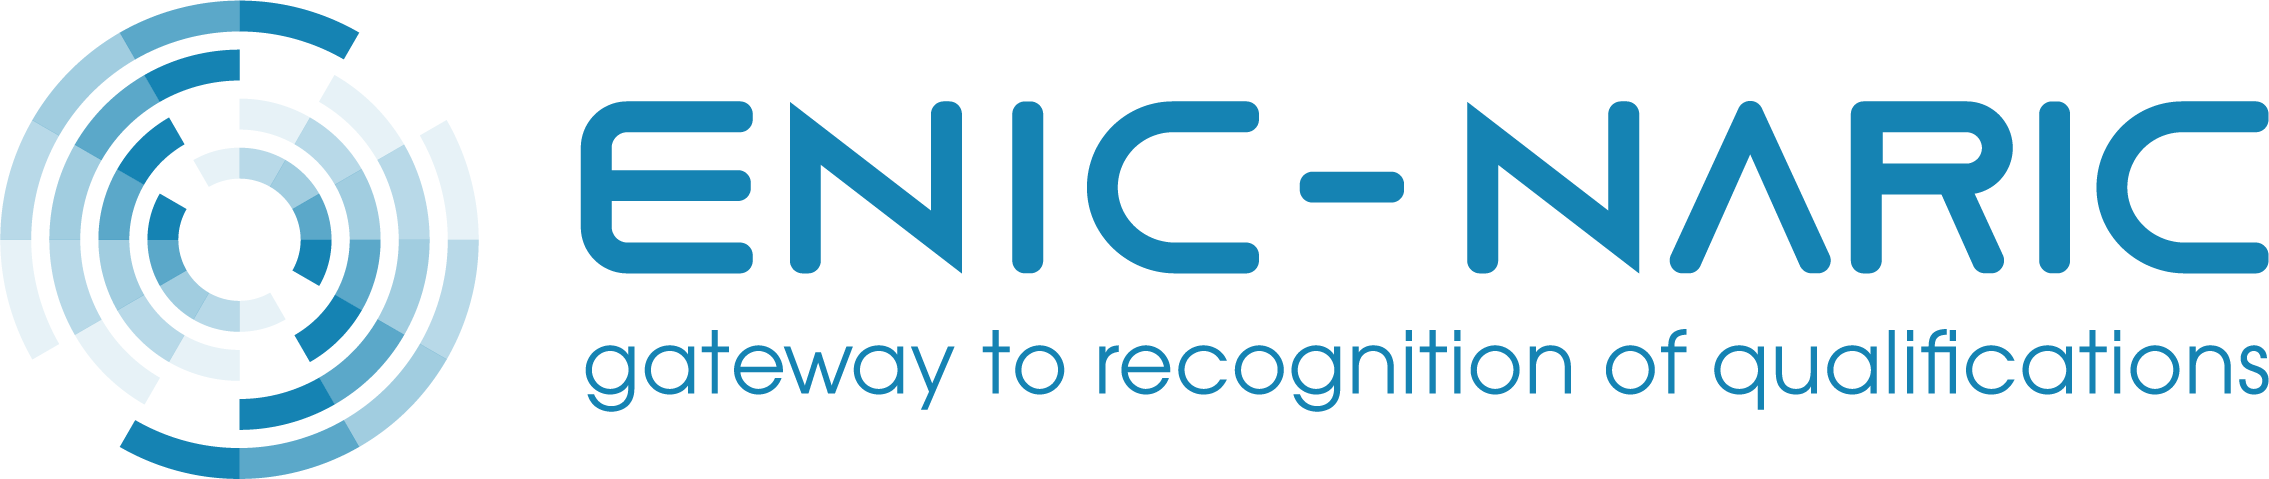 ENIC-NARIC logotyp